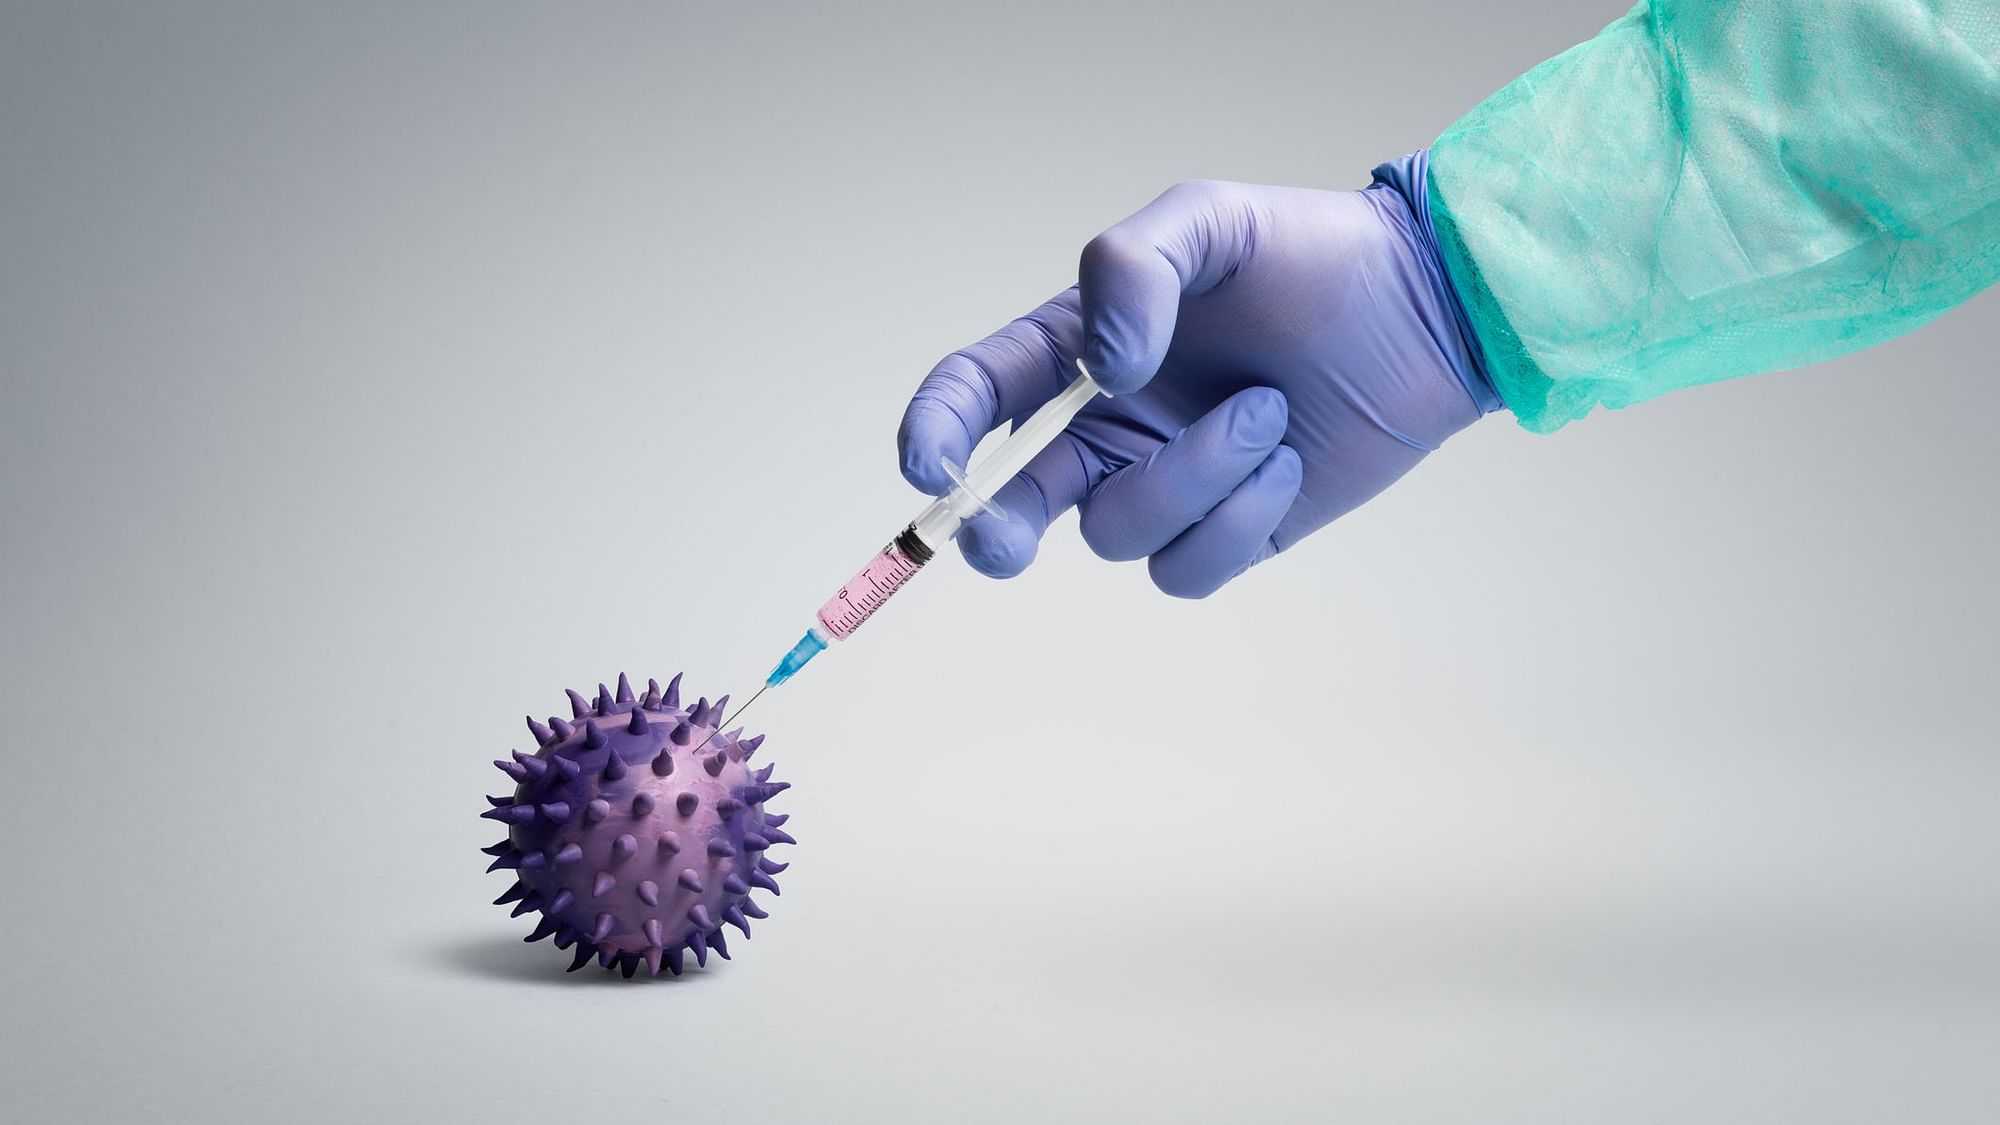 कोरोना वैक्सीन: महामारी को लेकर महामूर्खता करने जा रहे अमीर देश?